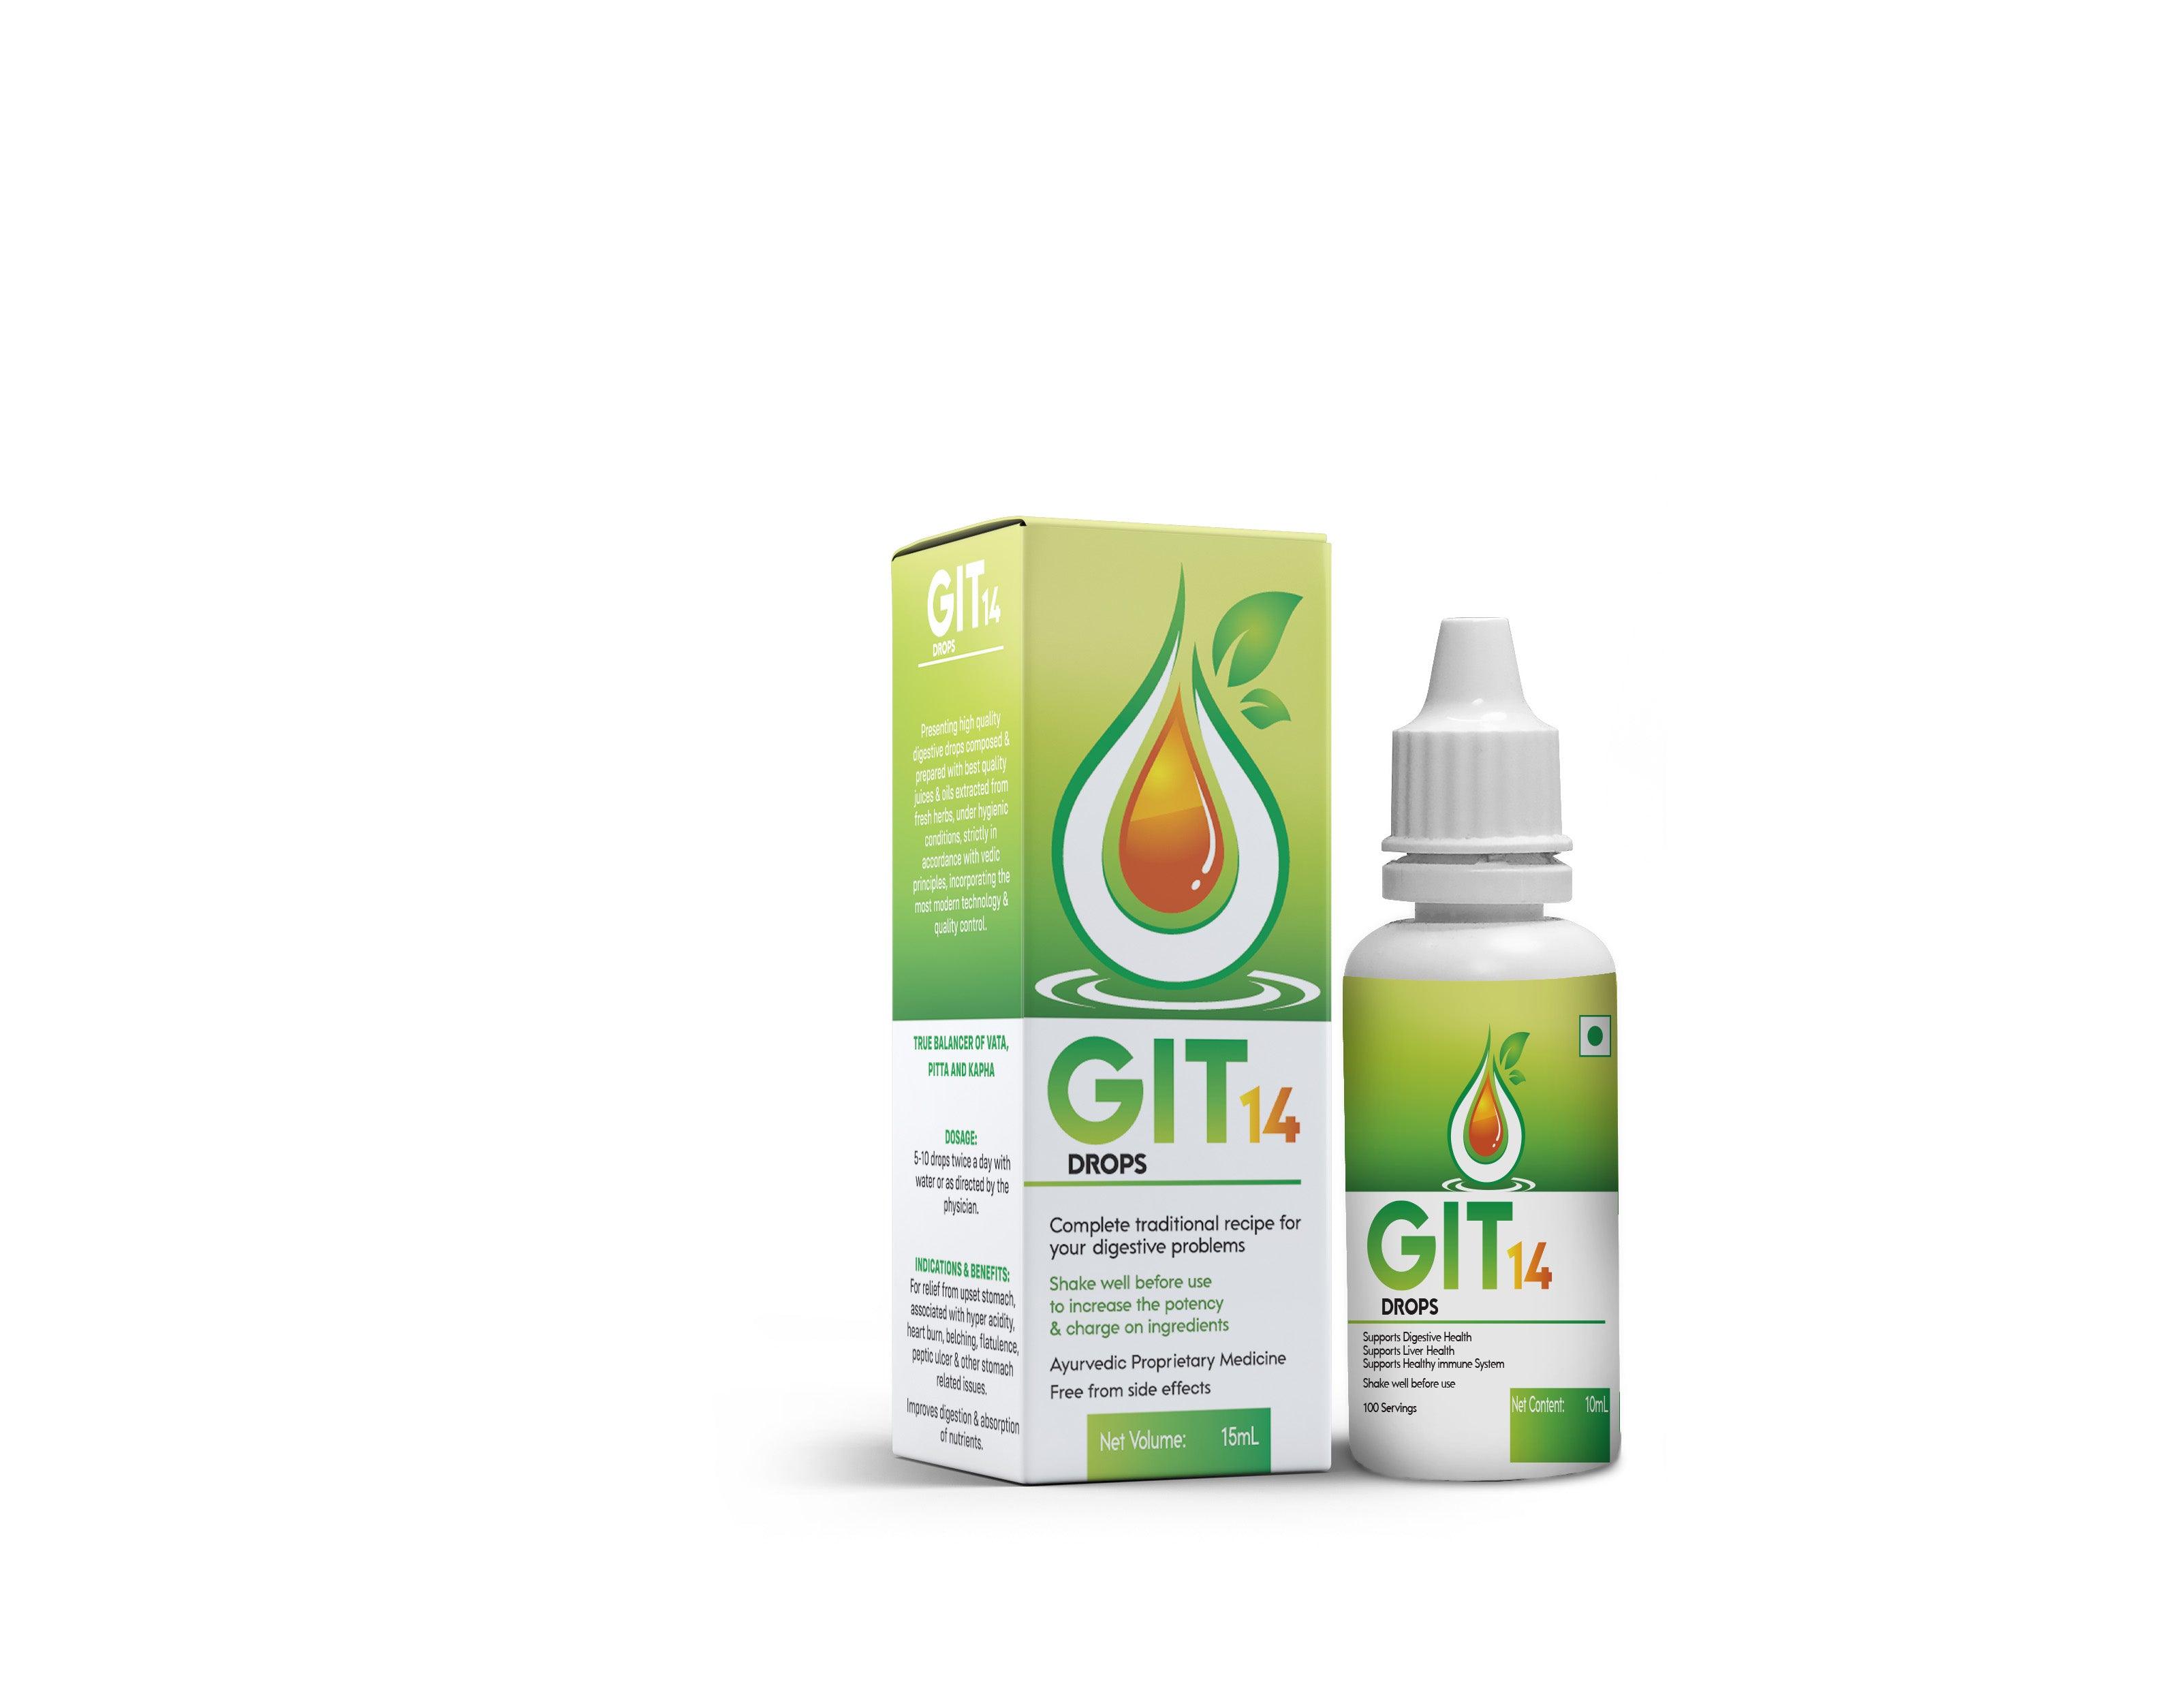 GIT 14 Drops (15 ml) - HERBS AND HILLS